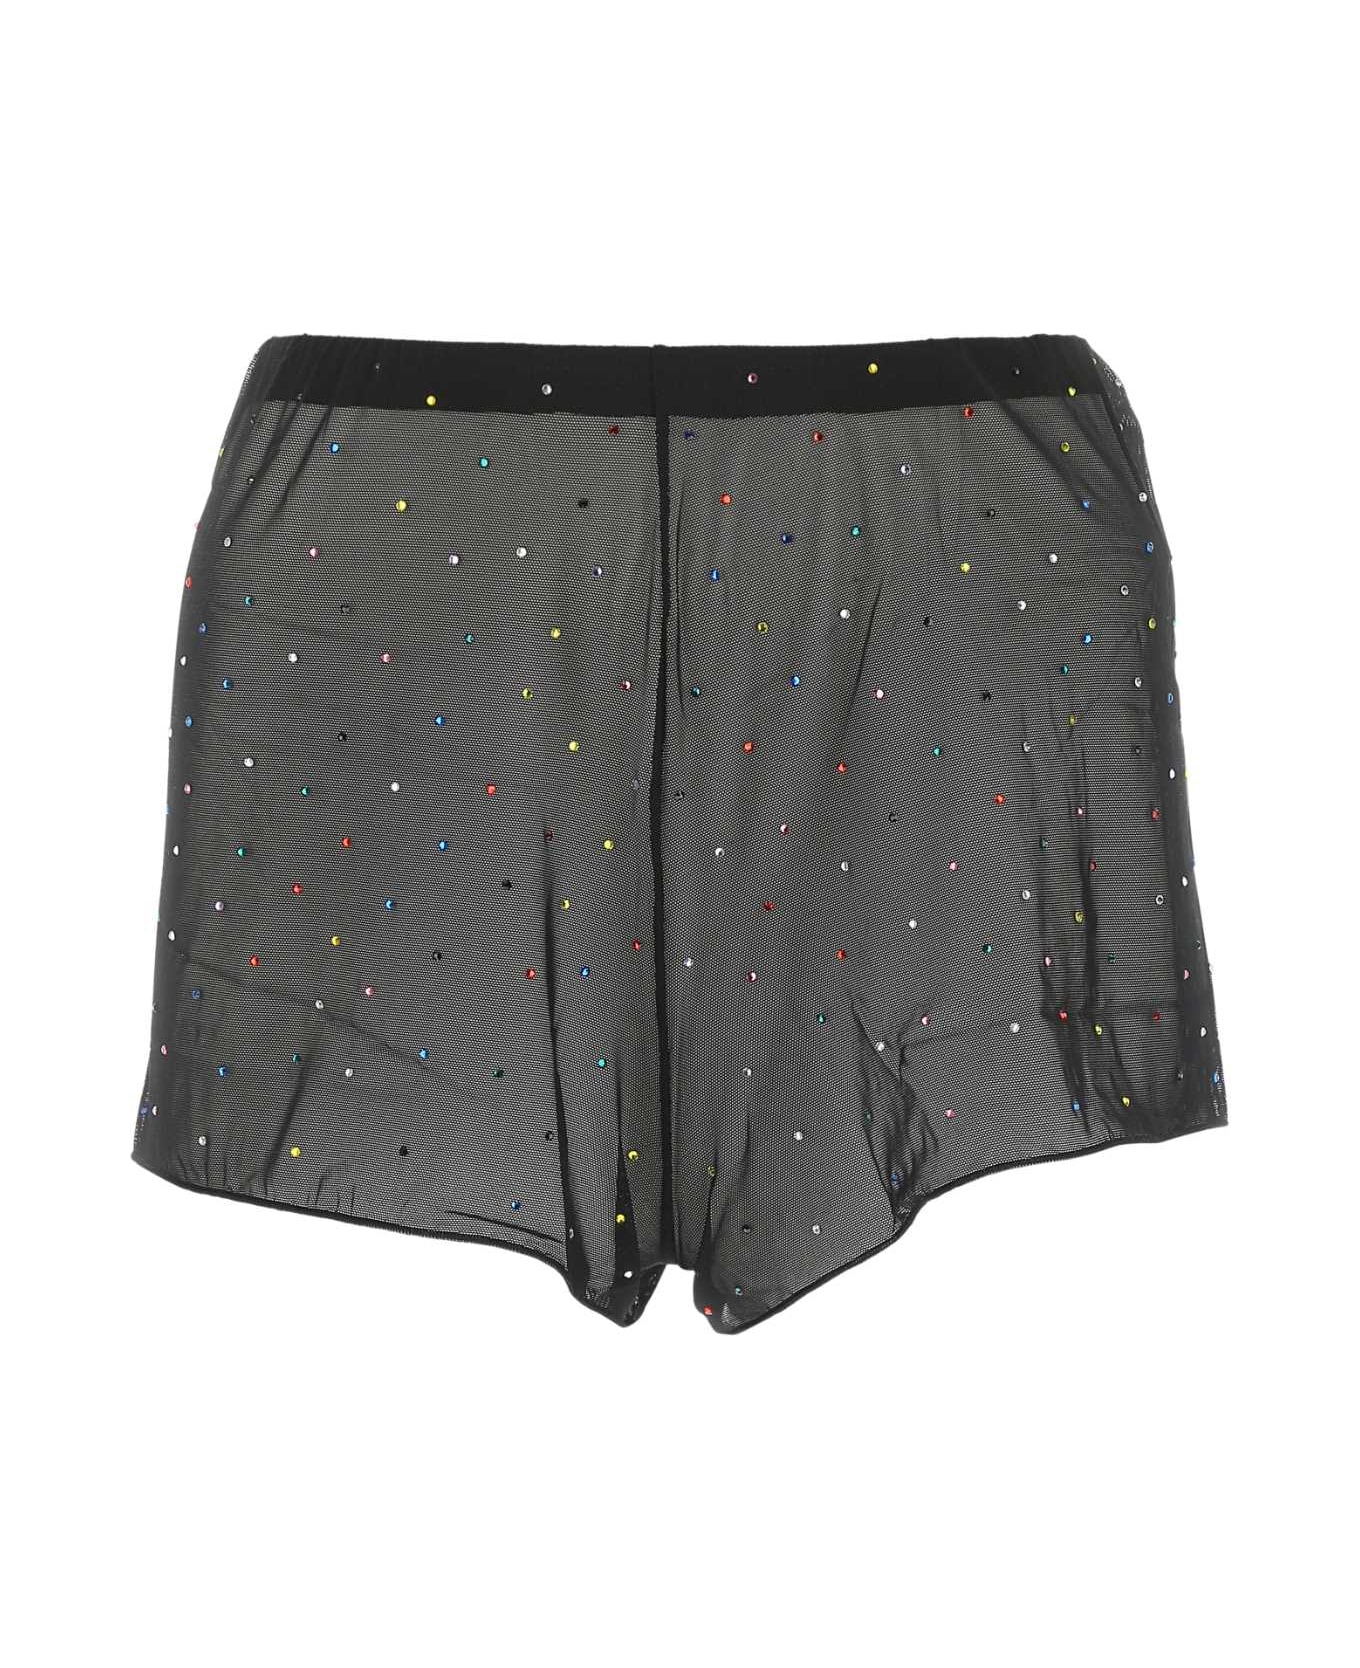 Oseree Embellished Stretch Mesh Lingerie Shorts - BLACKMULTI